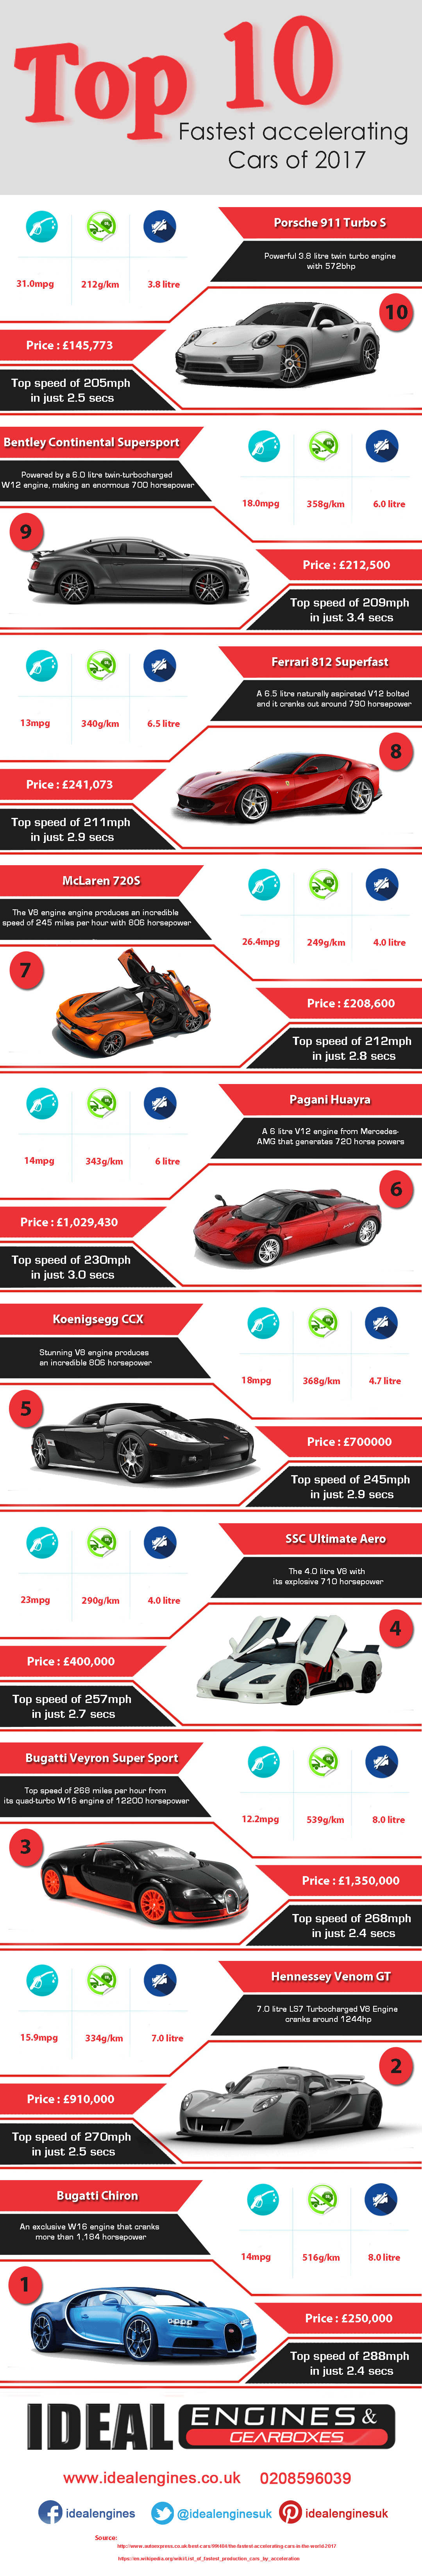 Top Ten Fastest Cars